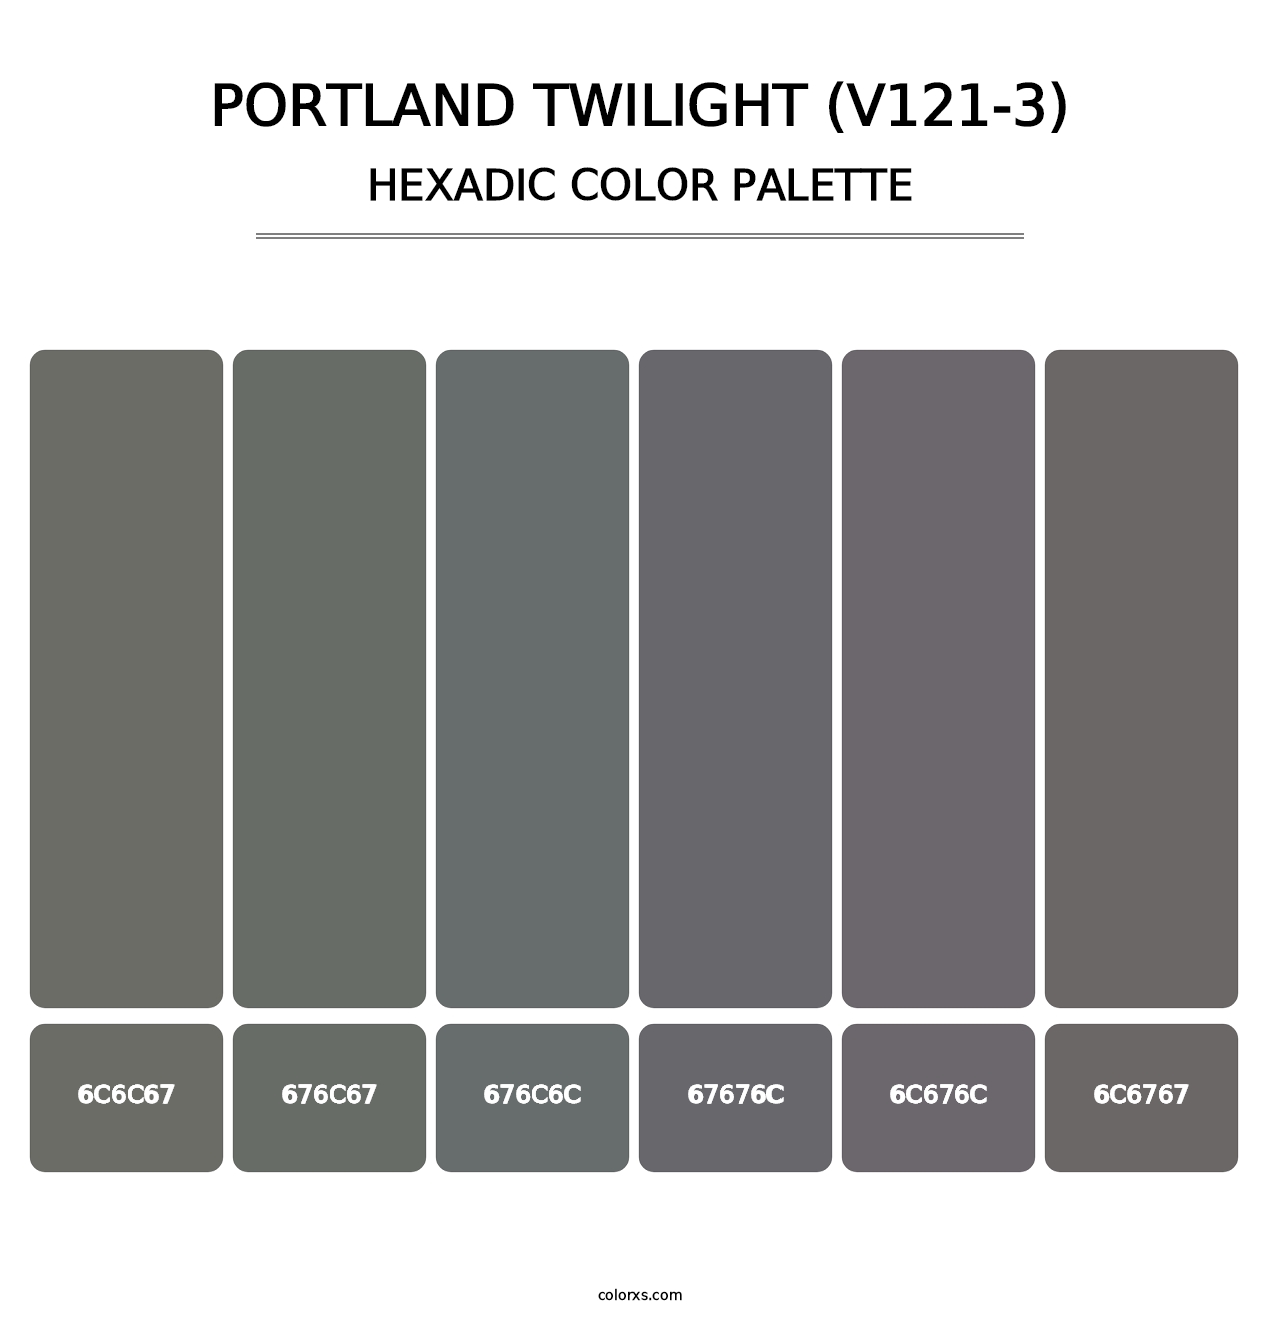 Portland Twilight (V121-3) - Hexadic Color Palette